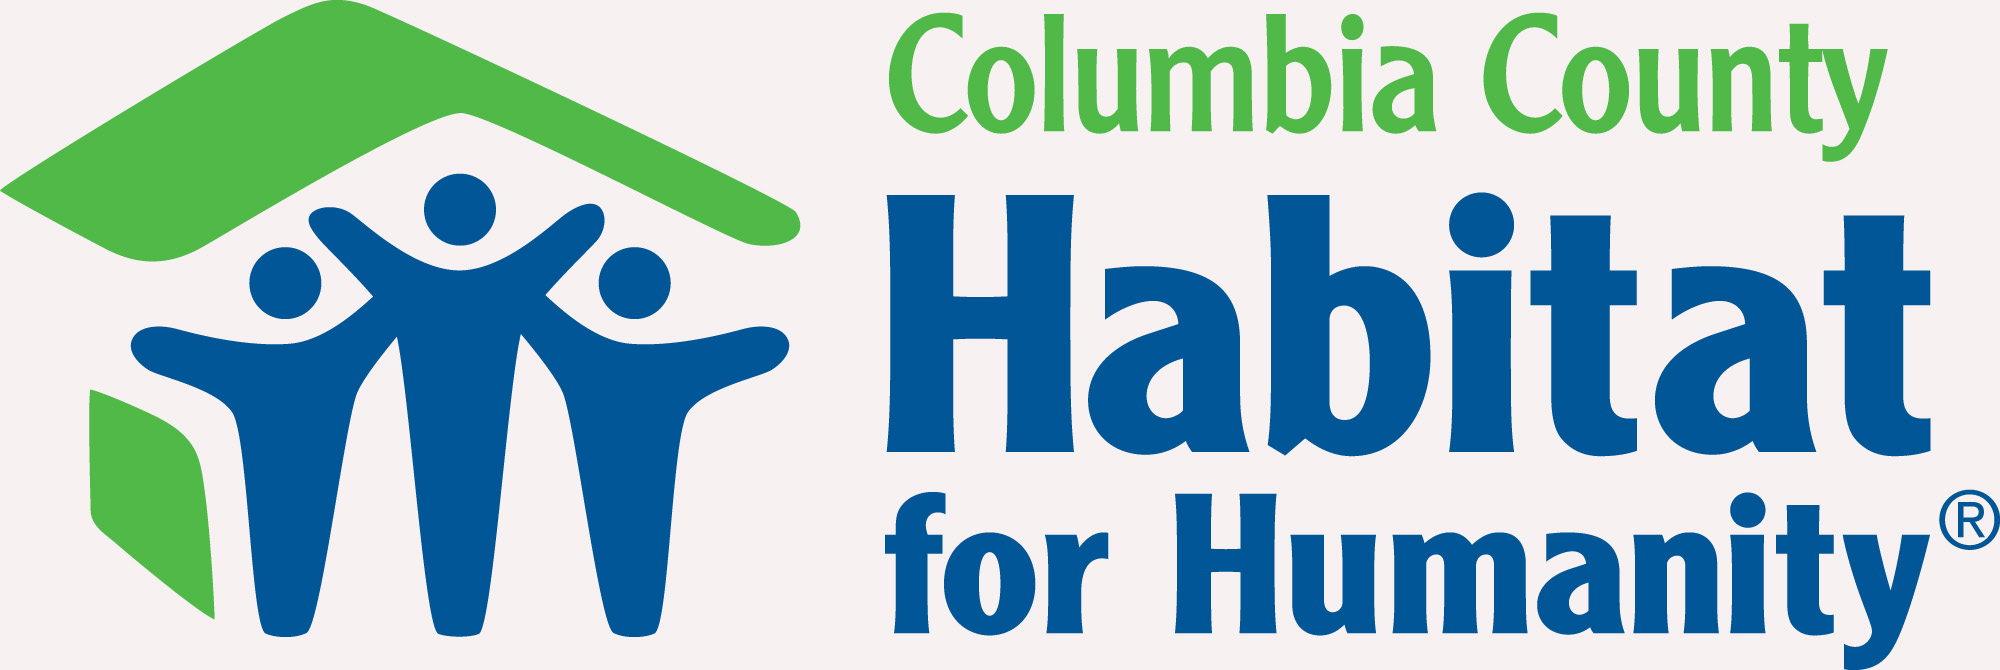 Columbia County Habitat for Humanity logo